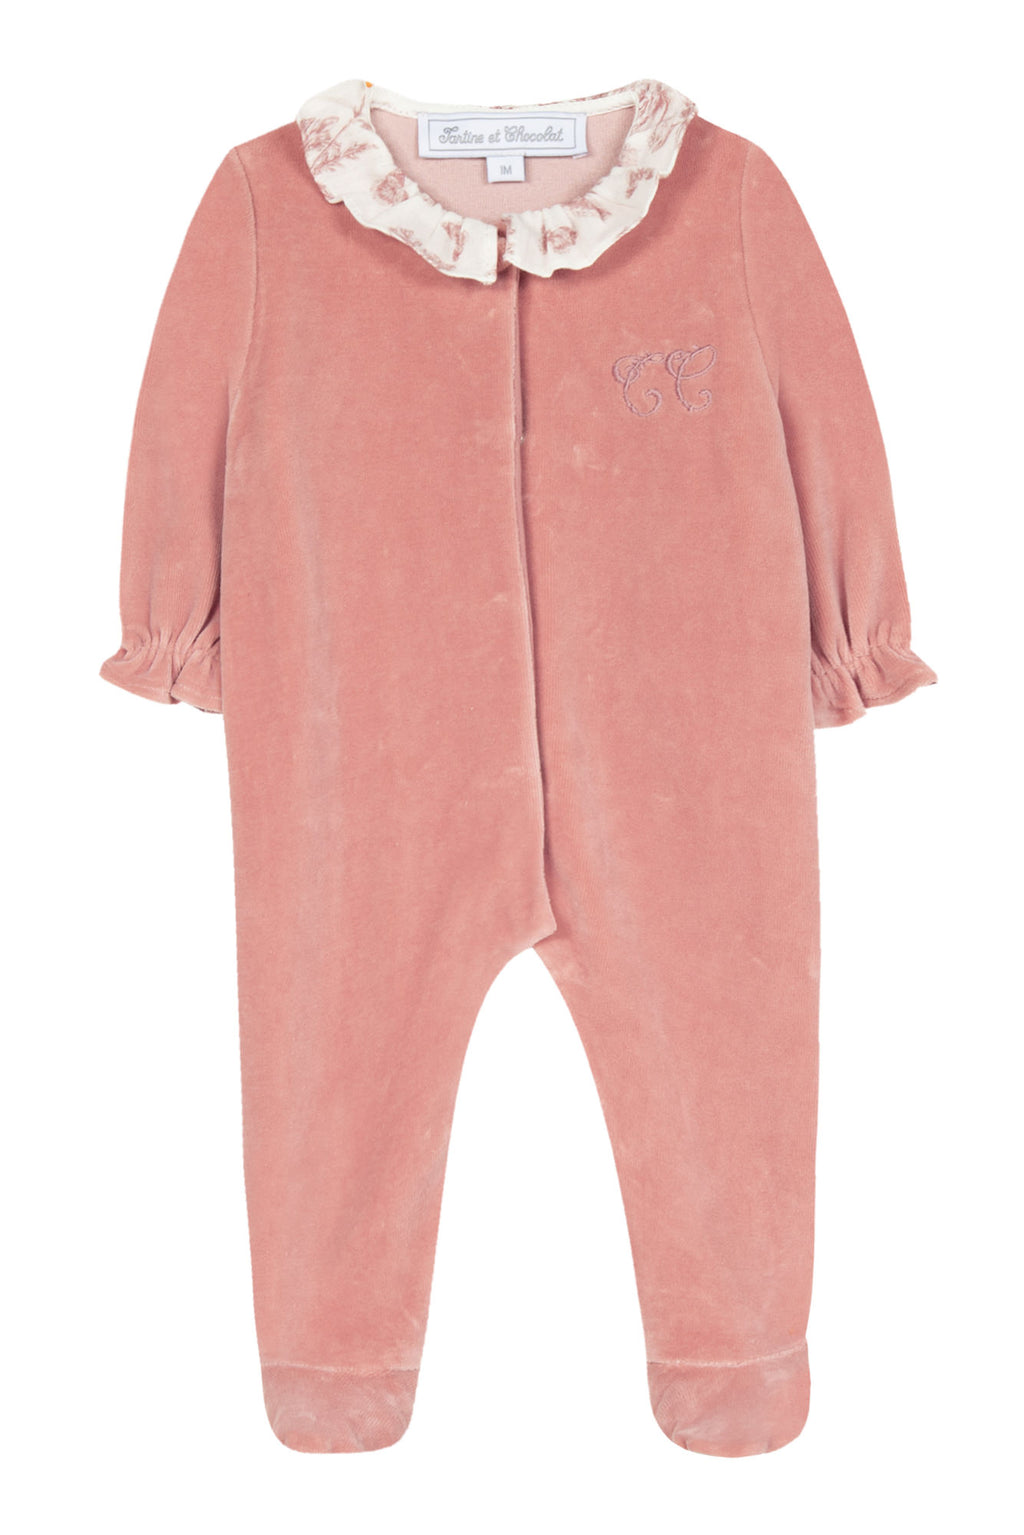 Pyjama - Rose en velours imprimé inspiration Toile de jouy